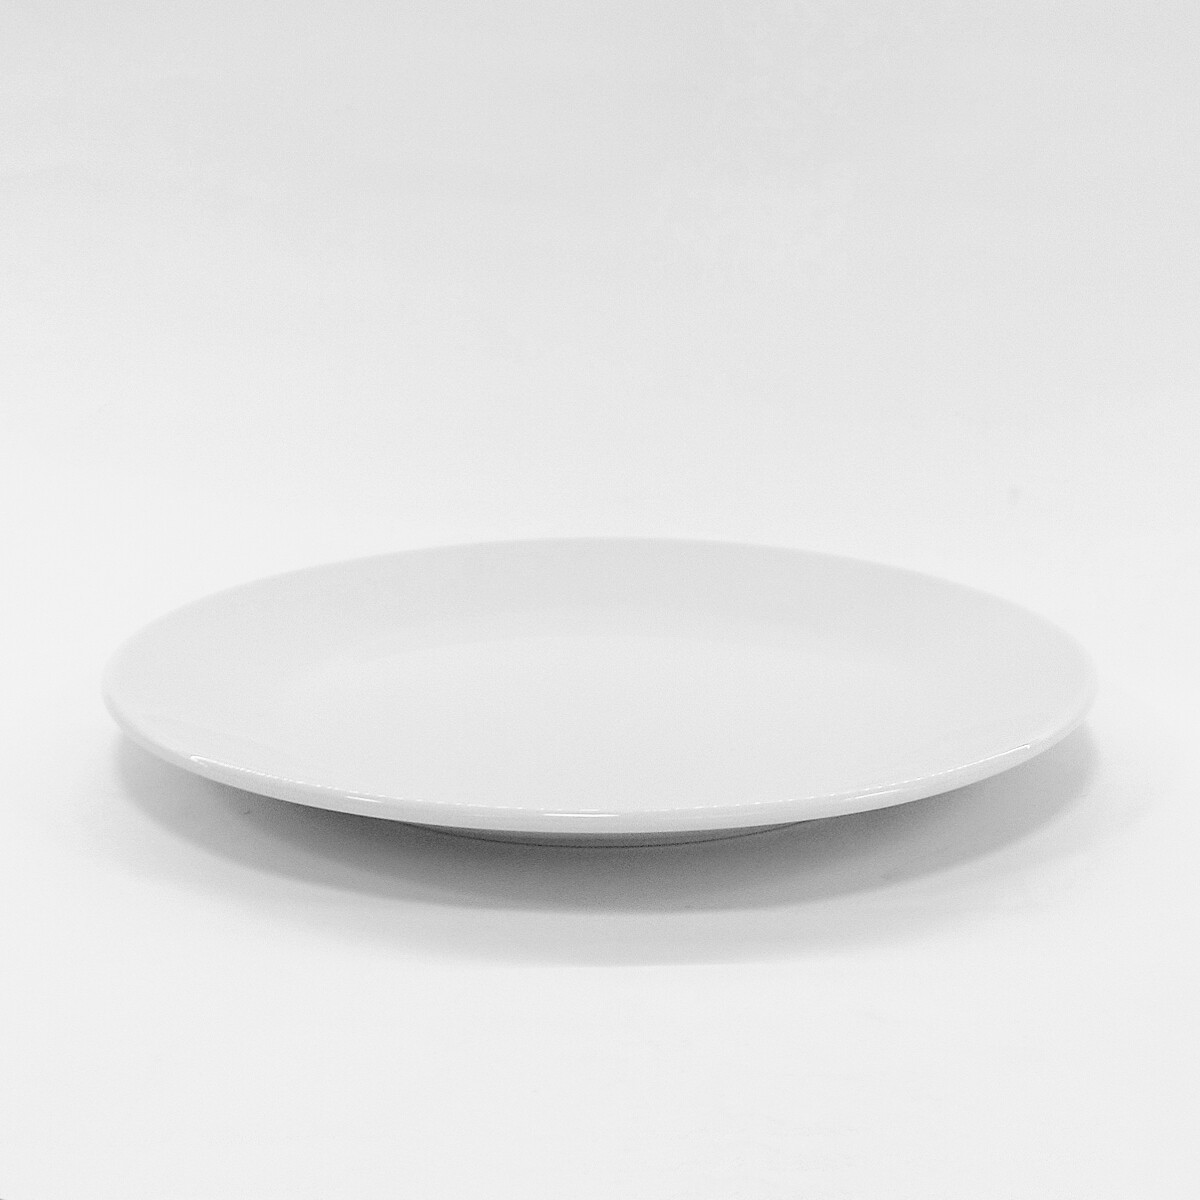 Plato Playo 19cm Royal Porcelain | Por Unidad 